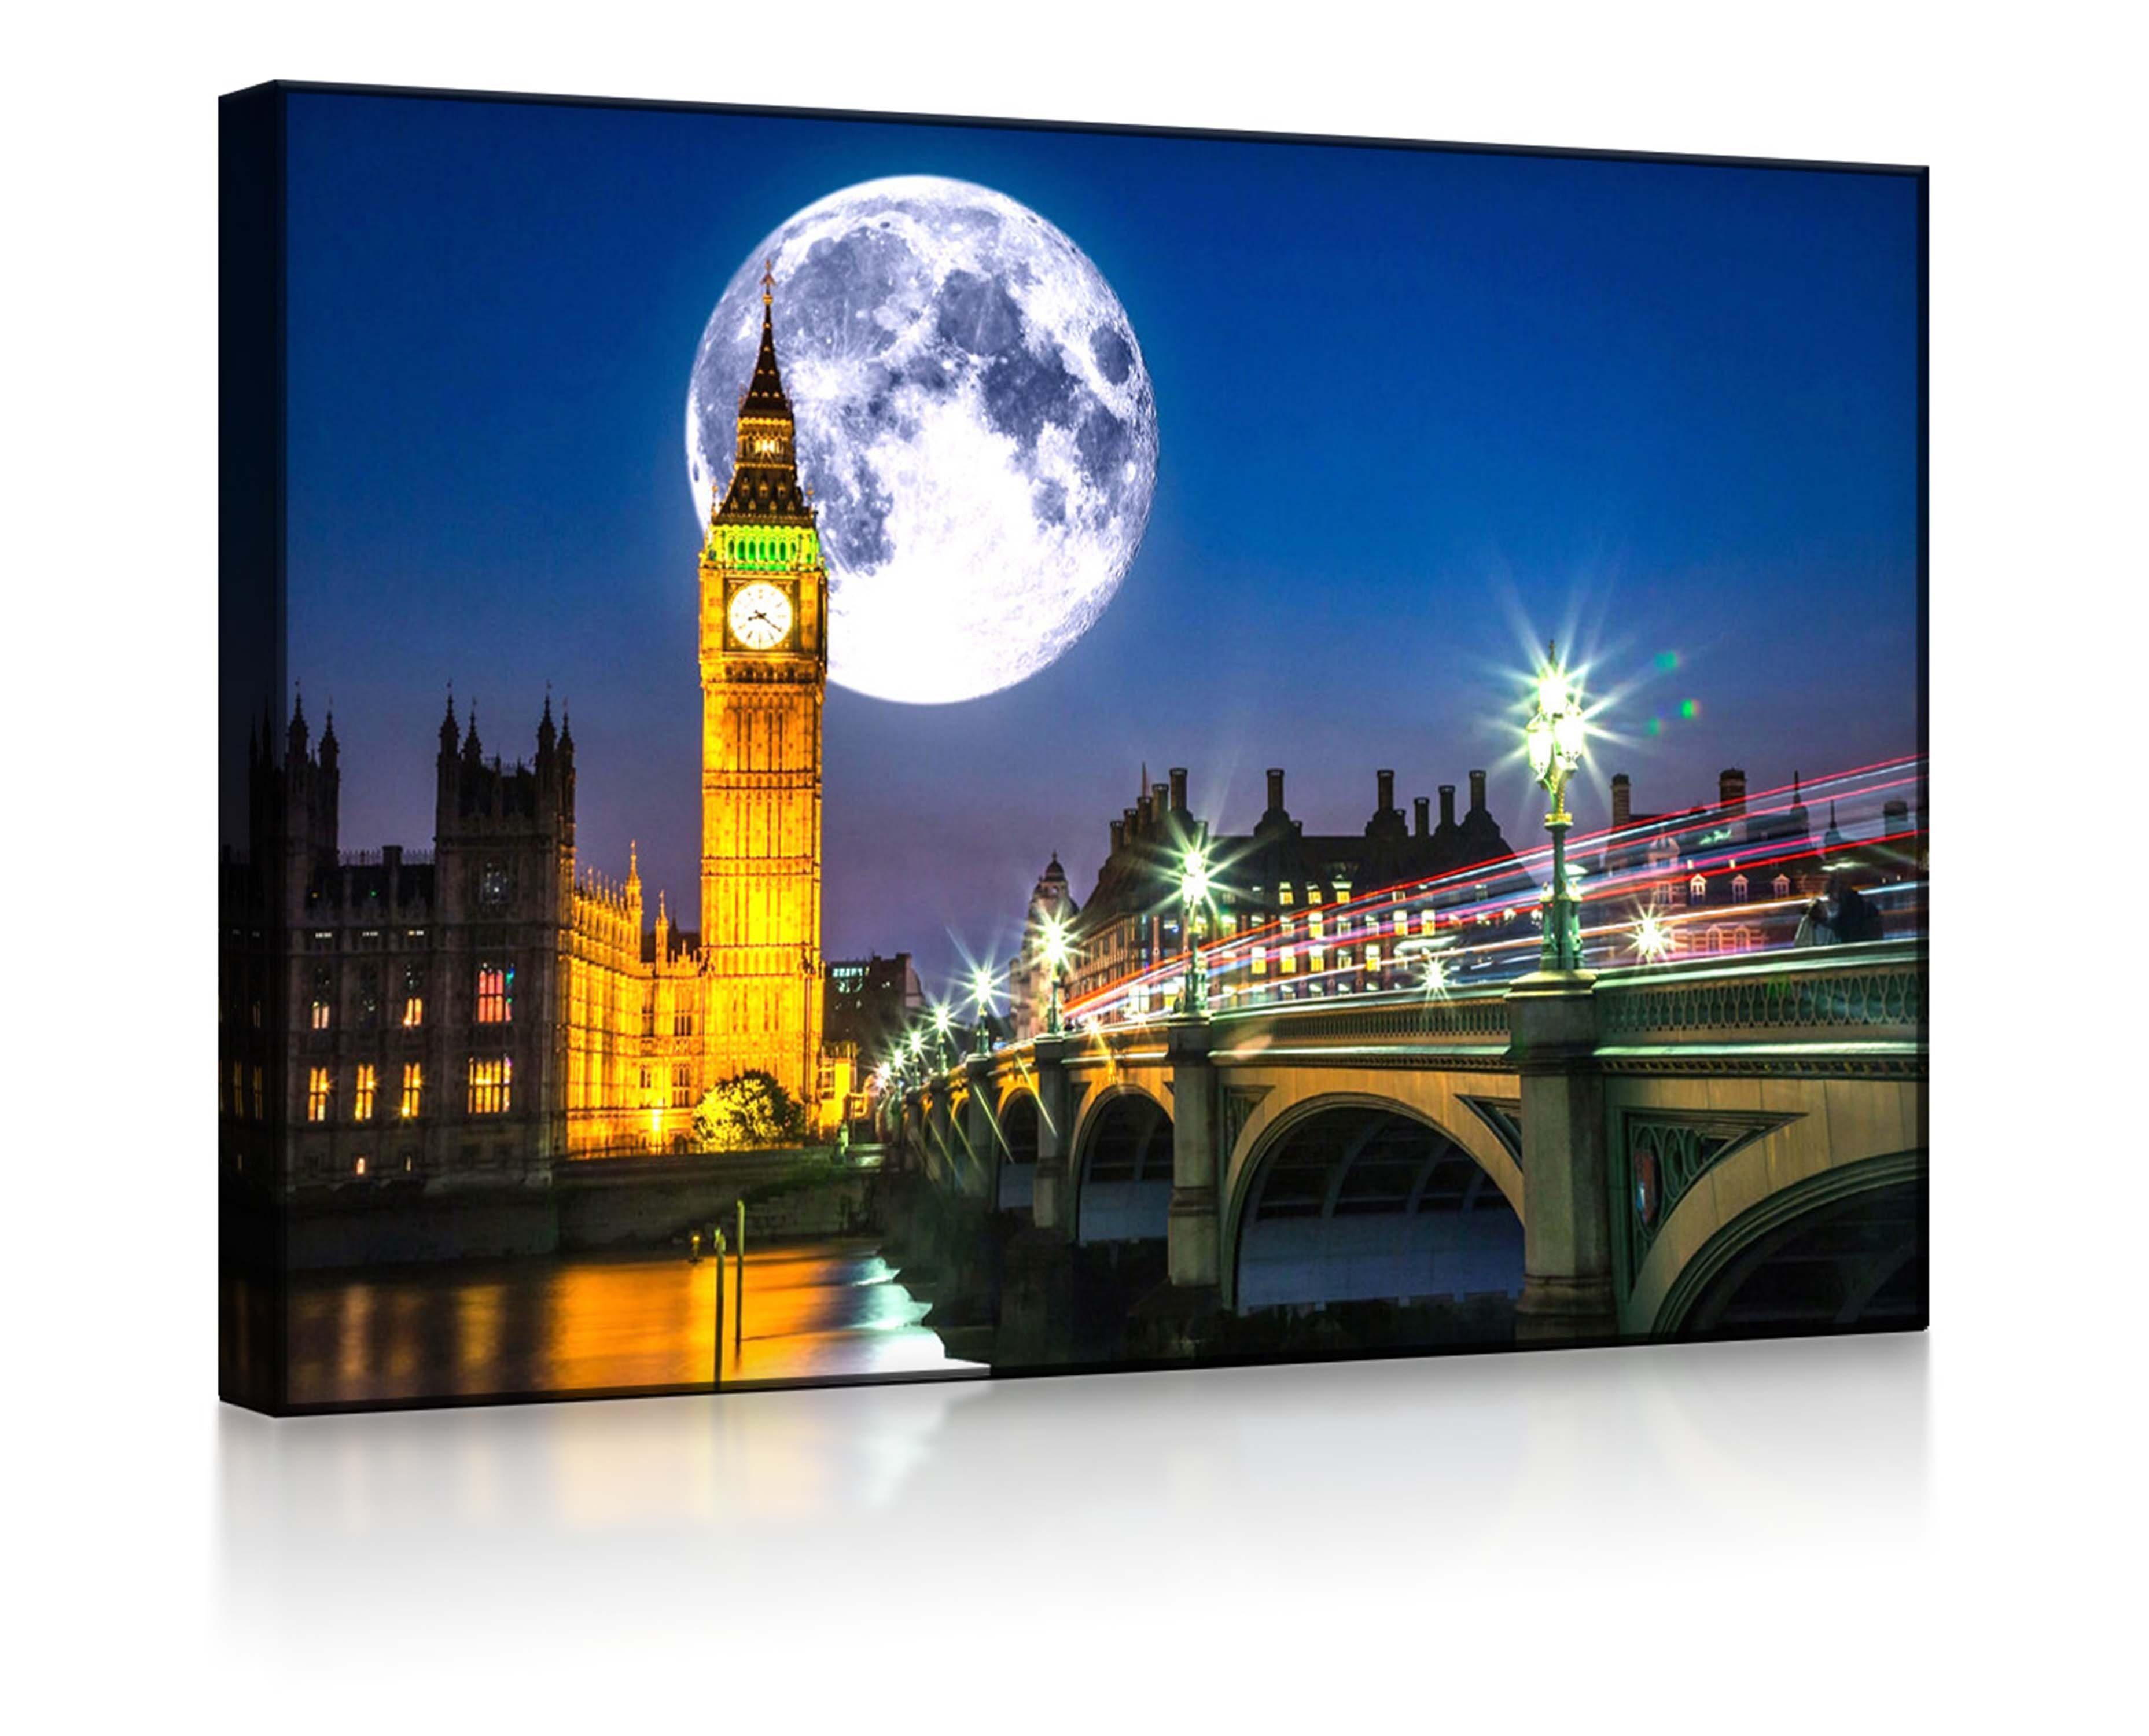 lightbox-multicolor LED-Bild Big Ben vor großen Mond in London front lighted / 60x40cm, Leuchtbild mit Fernbedienung